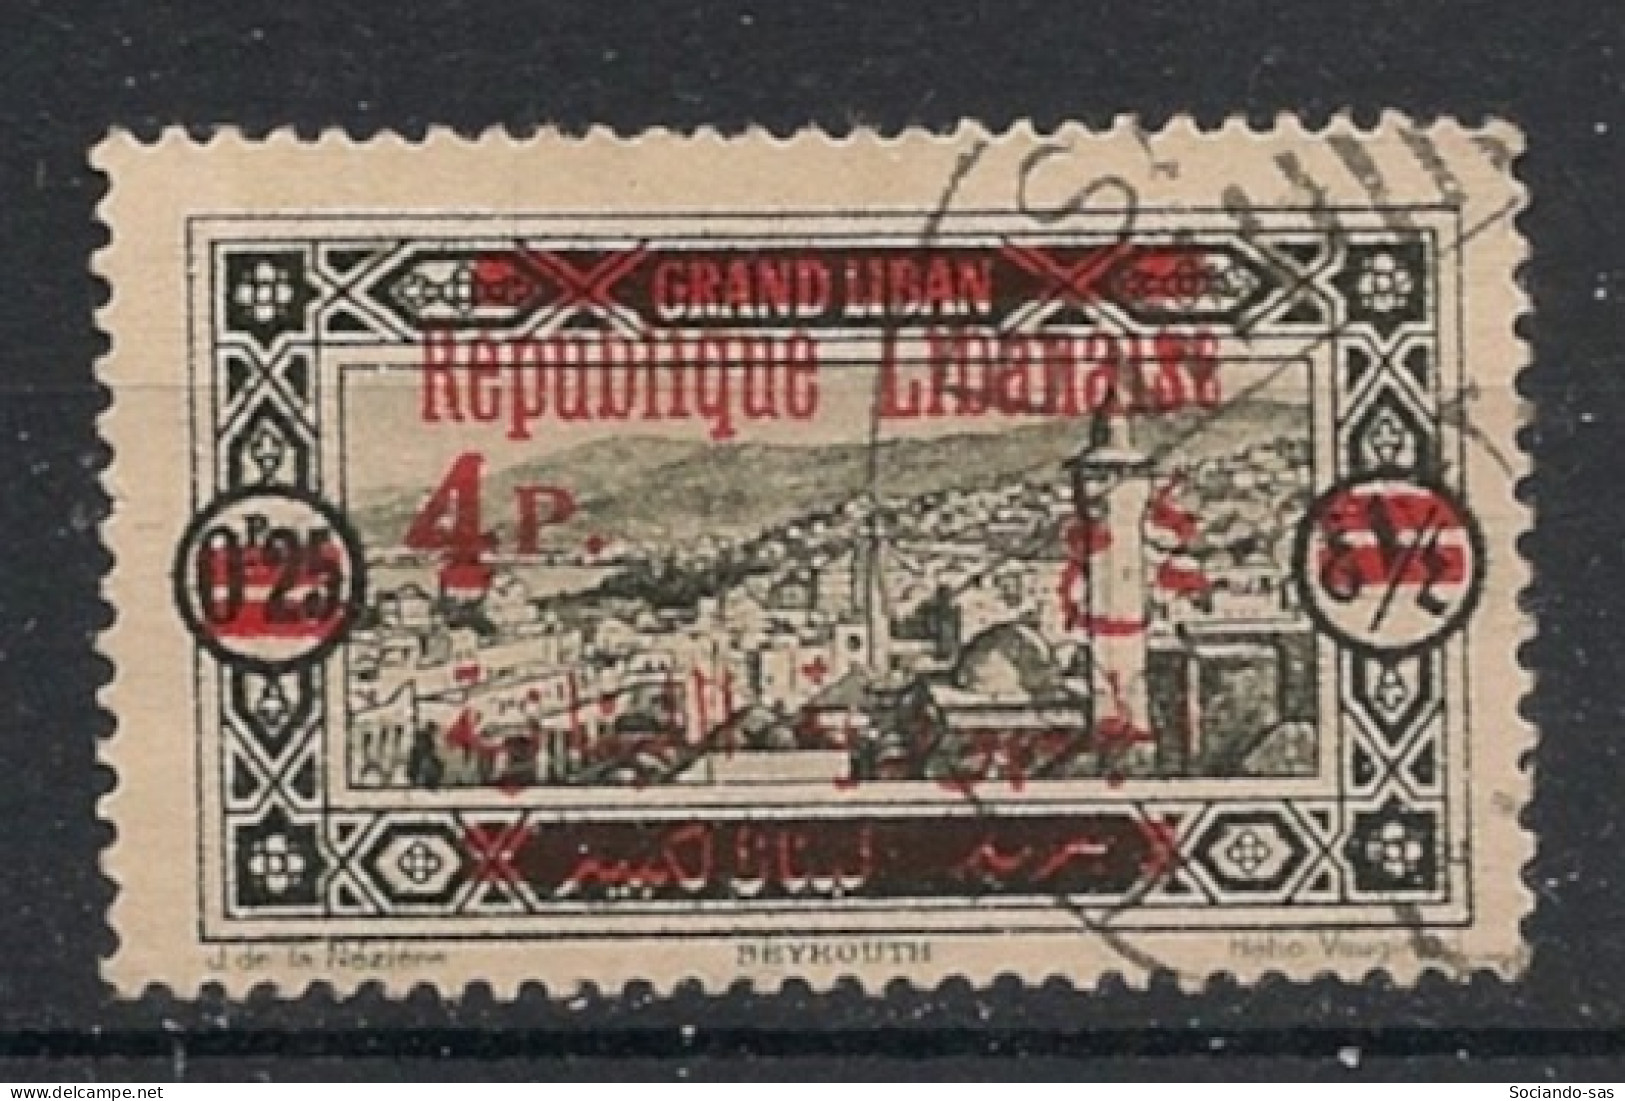 GRAND LIBAN - 1928-29 - N°YT. 119 - Beyrouth 4pi Sur 0pi25 Vert-noir - Oblitéré / Used - Gebraucht